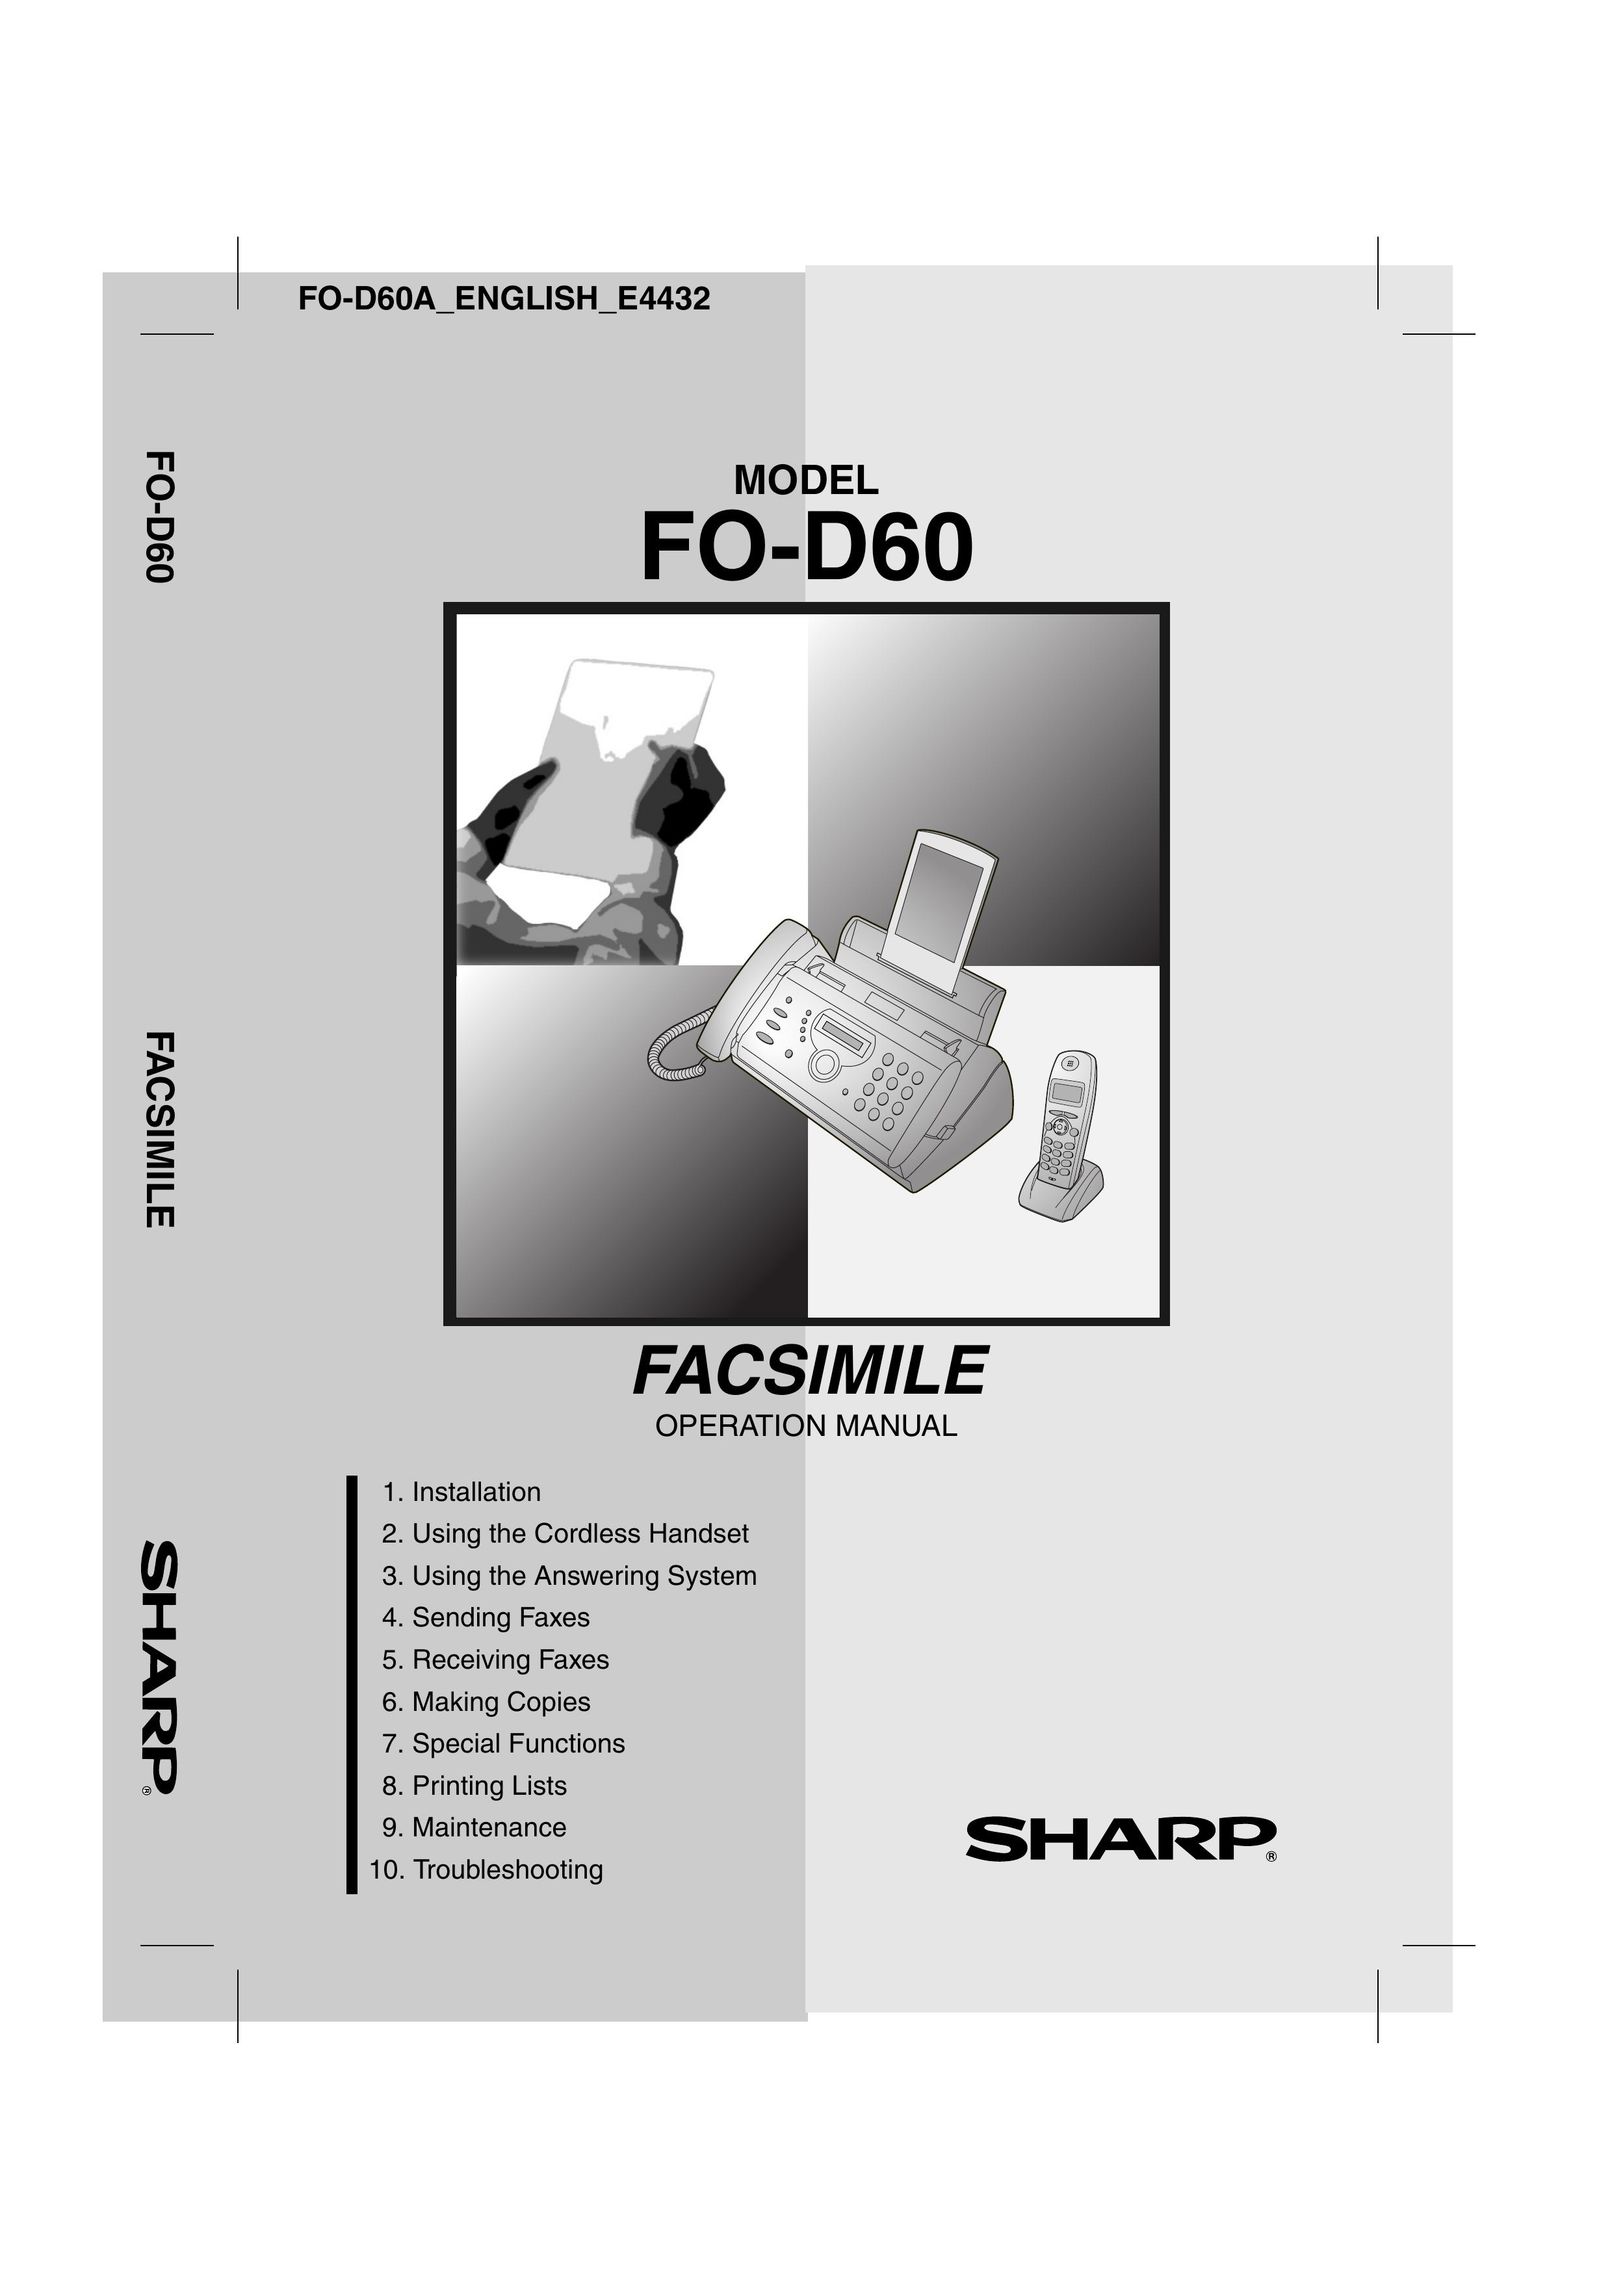 Sharp FO-D60 Fax Machine User Manual